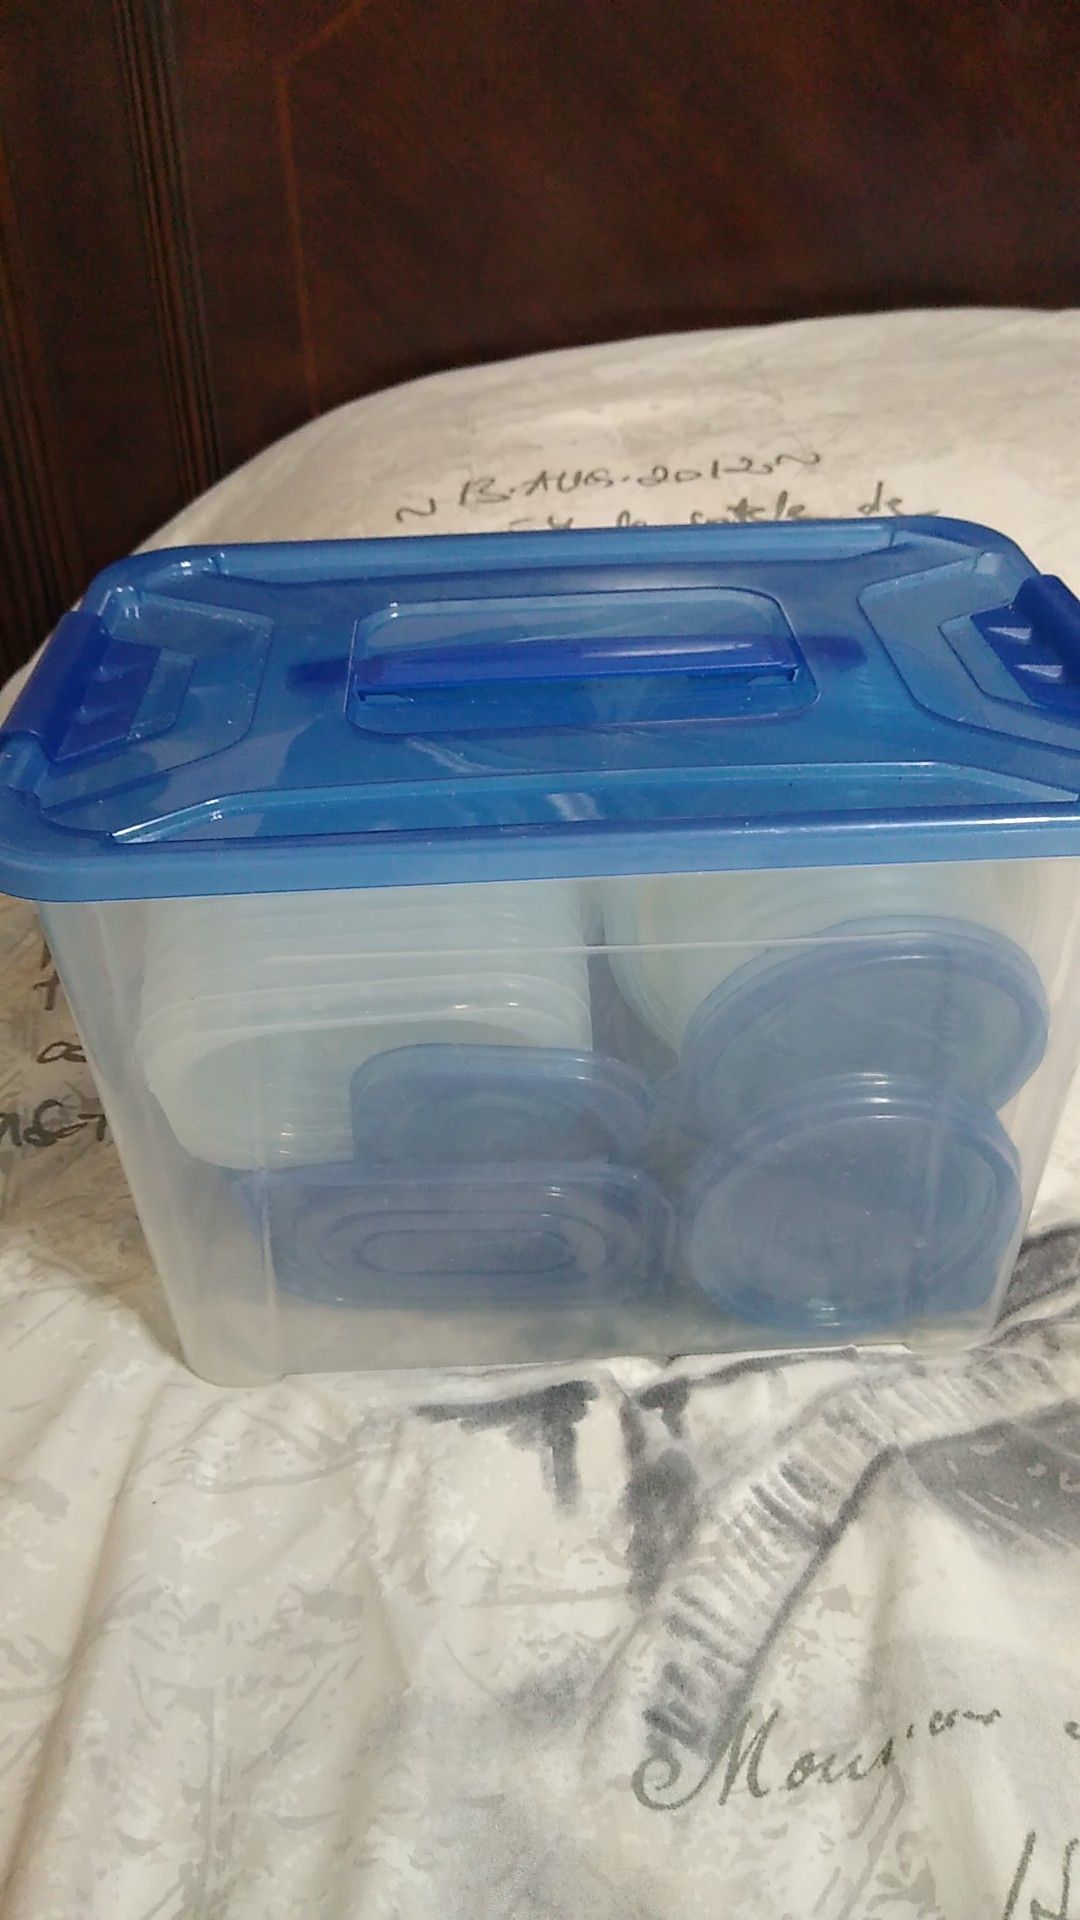 Plastic containers w/storage